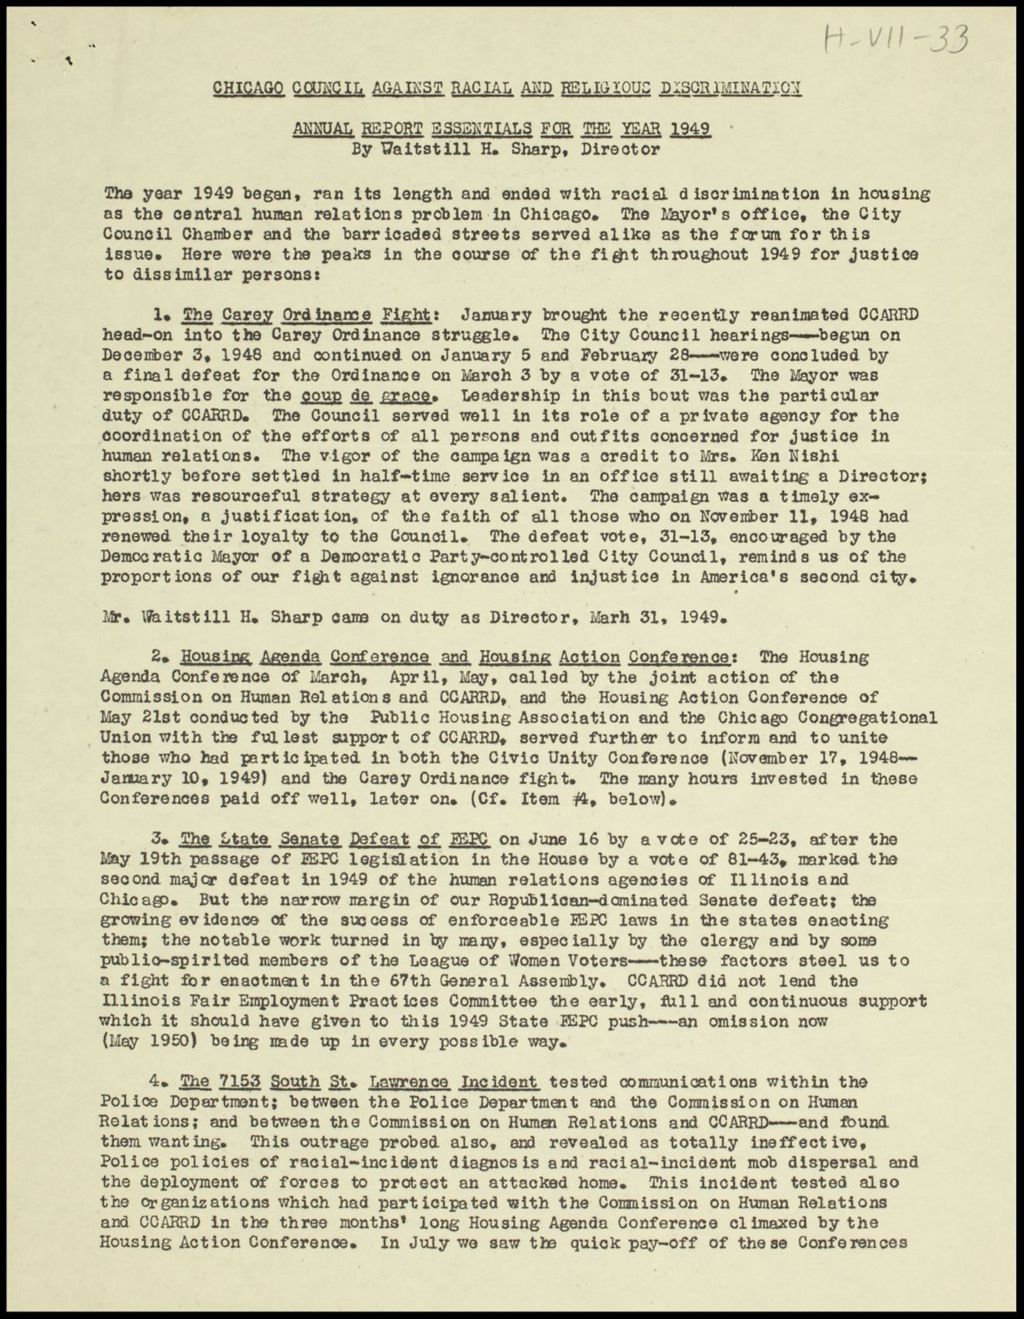 Miniature of Chicago Council Against Racial and Religious Discrimination, 1949-1953 (Folder I-2637)